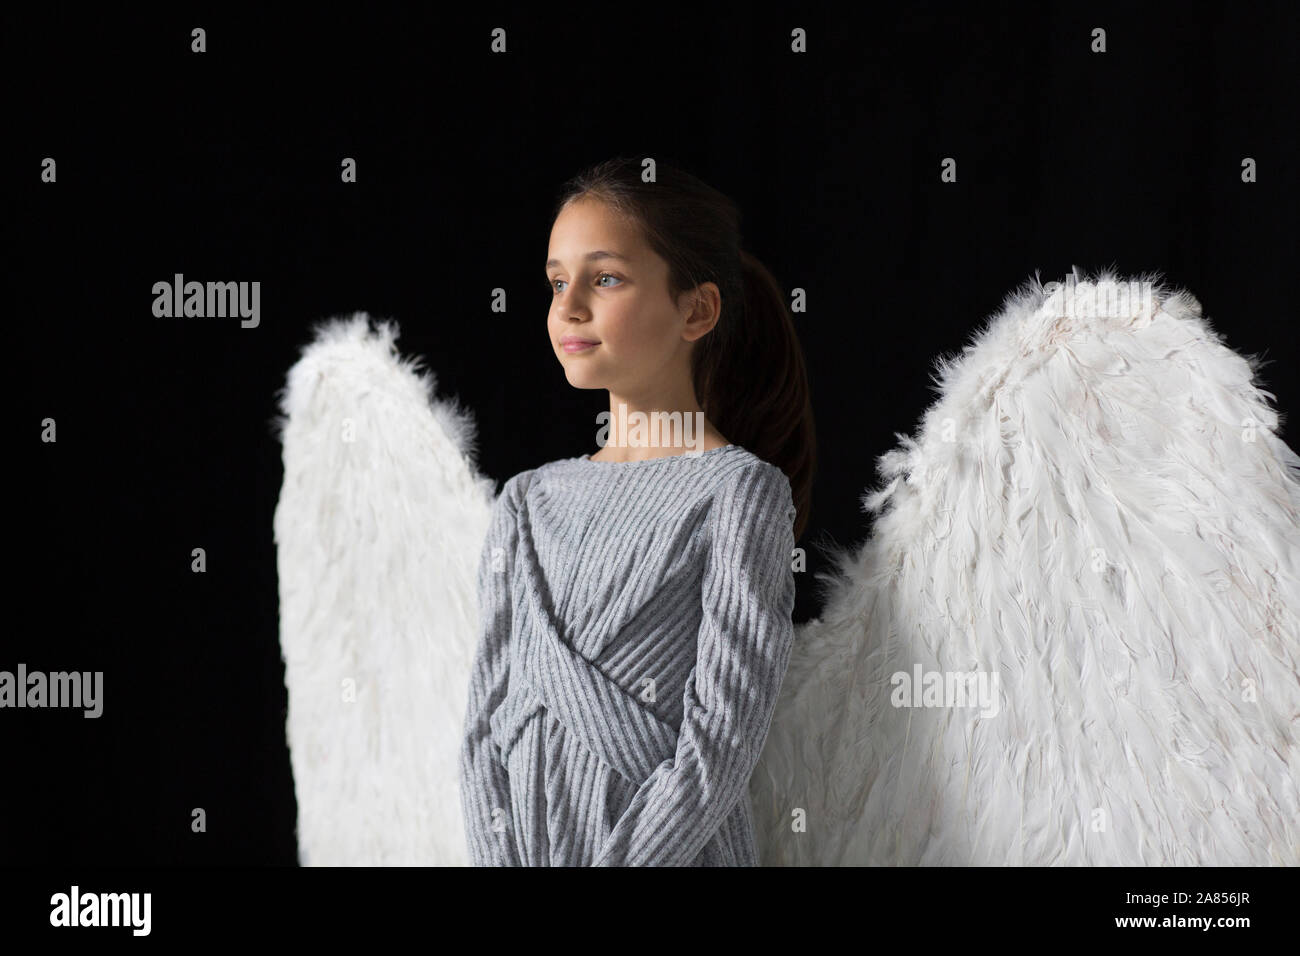 Serene girl wearing angel wings Stock Photo